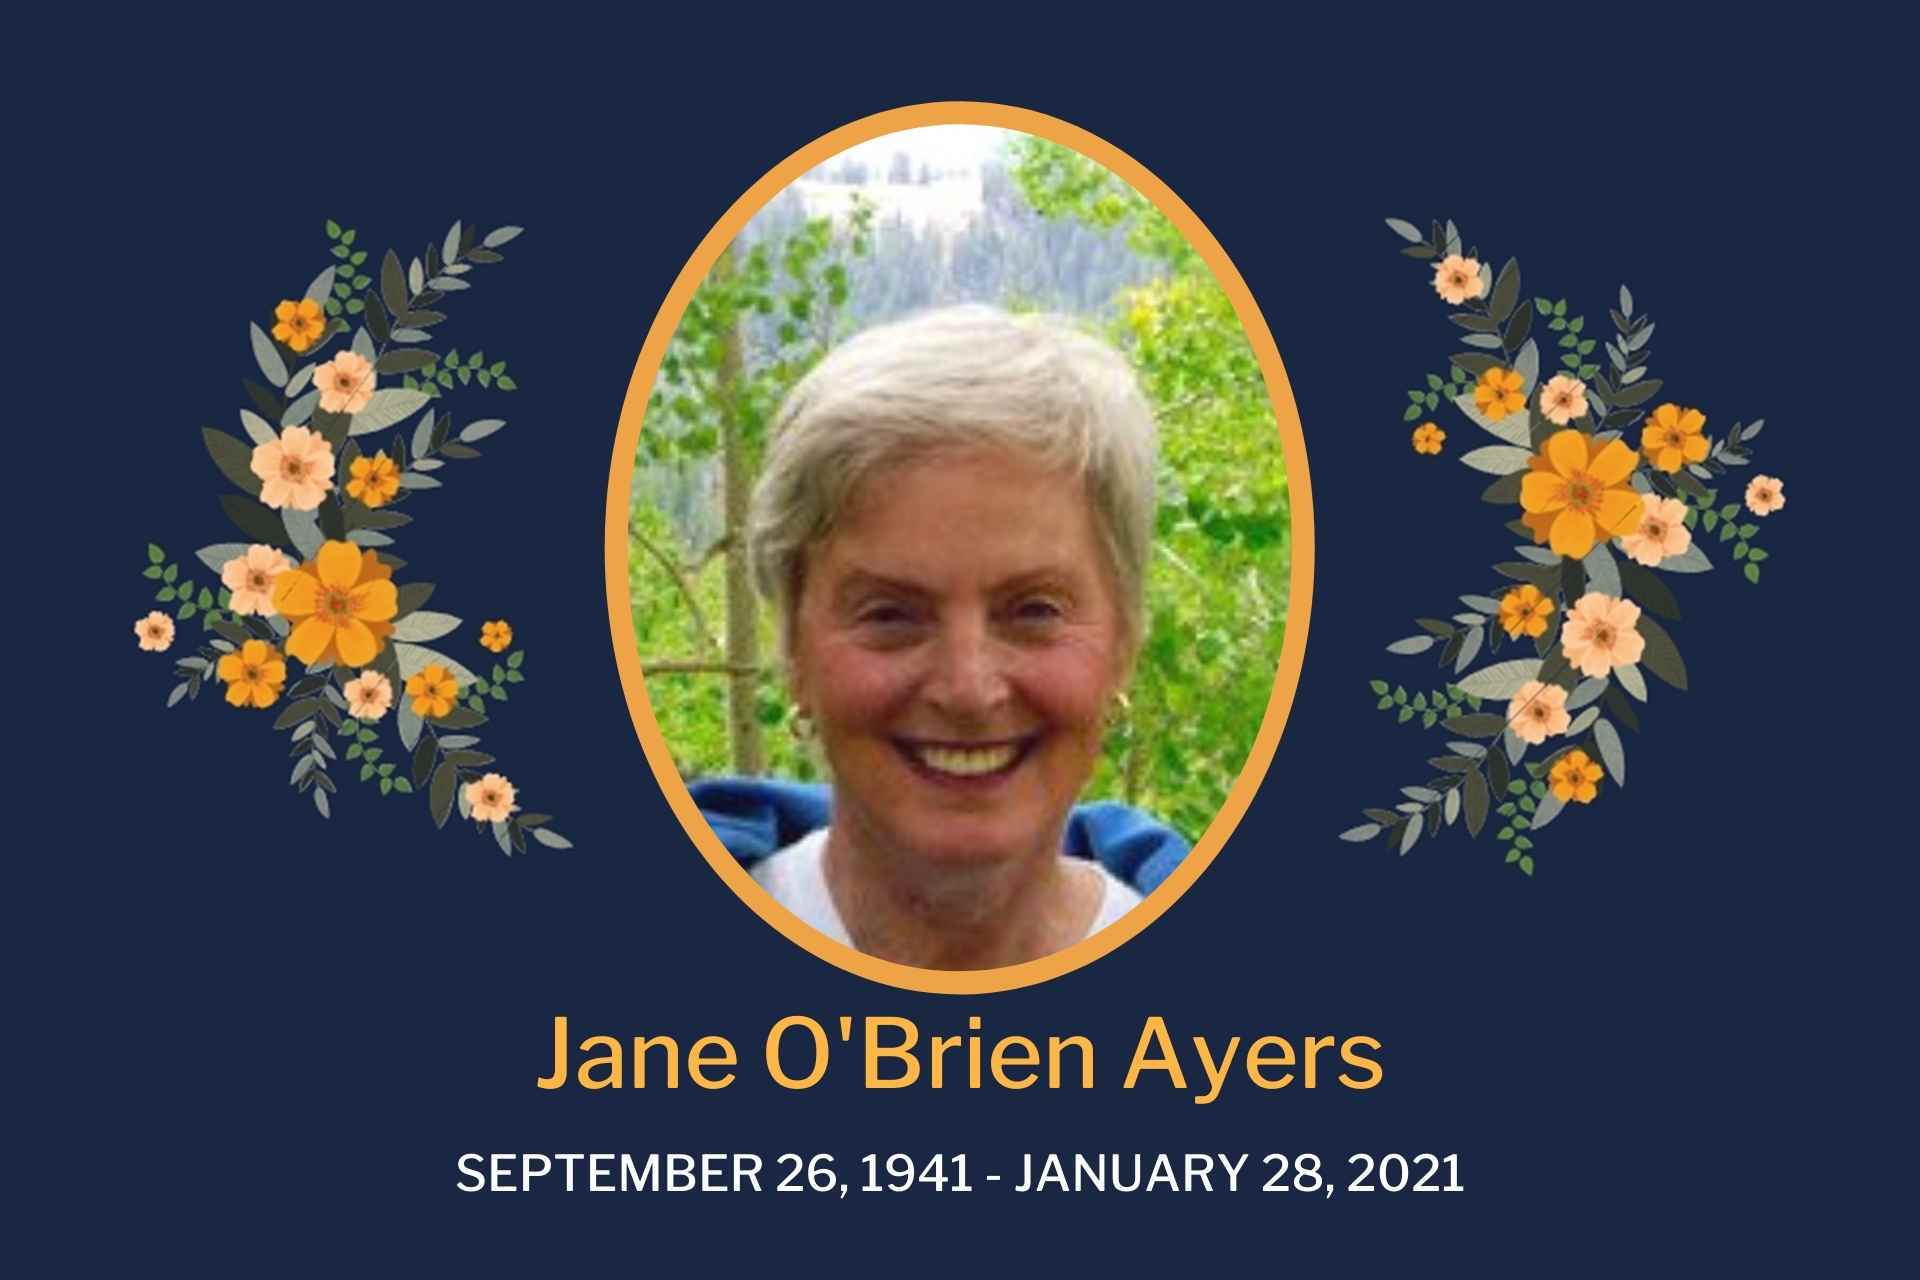 Jane O'Brien Ayers